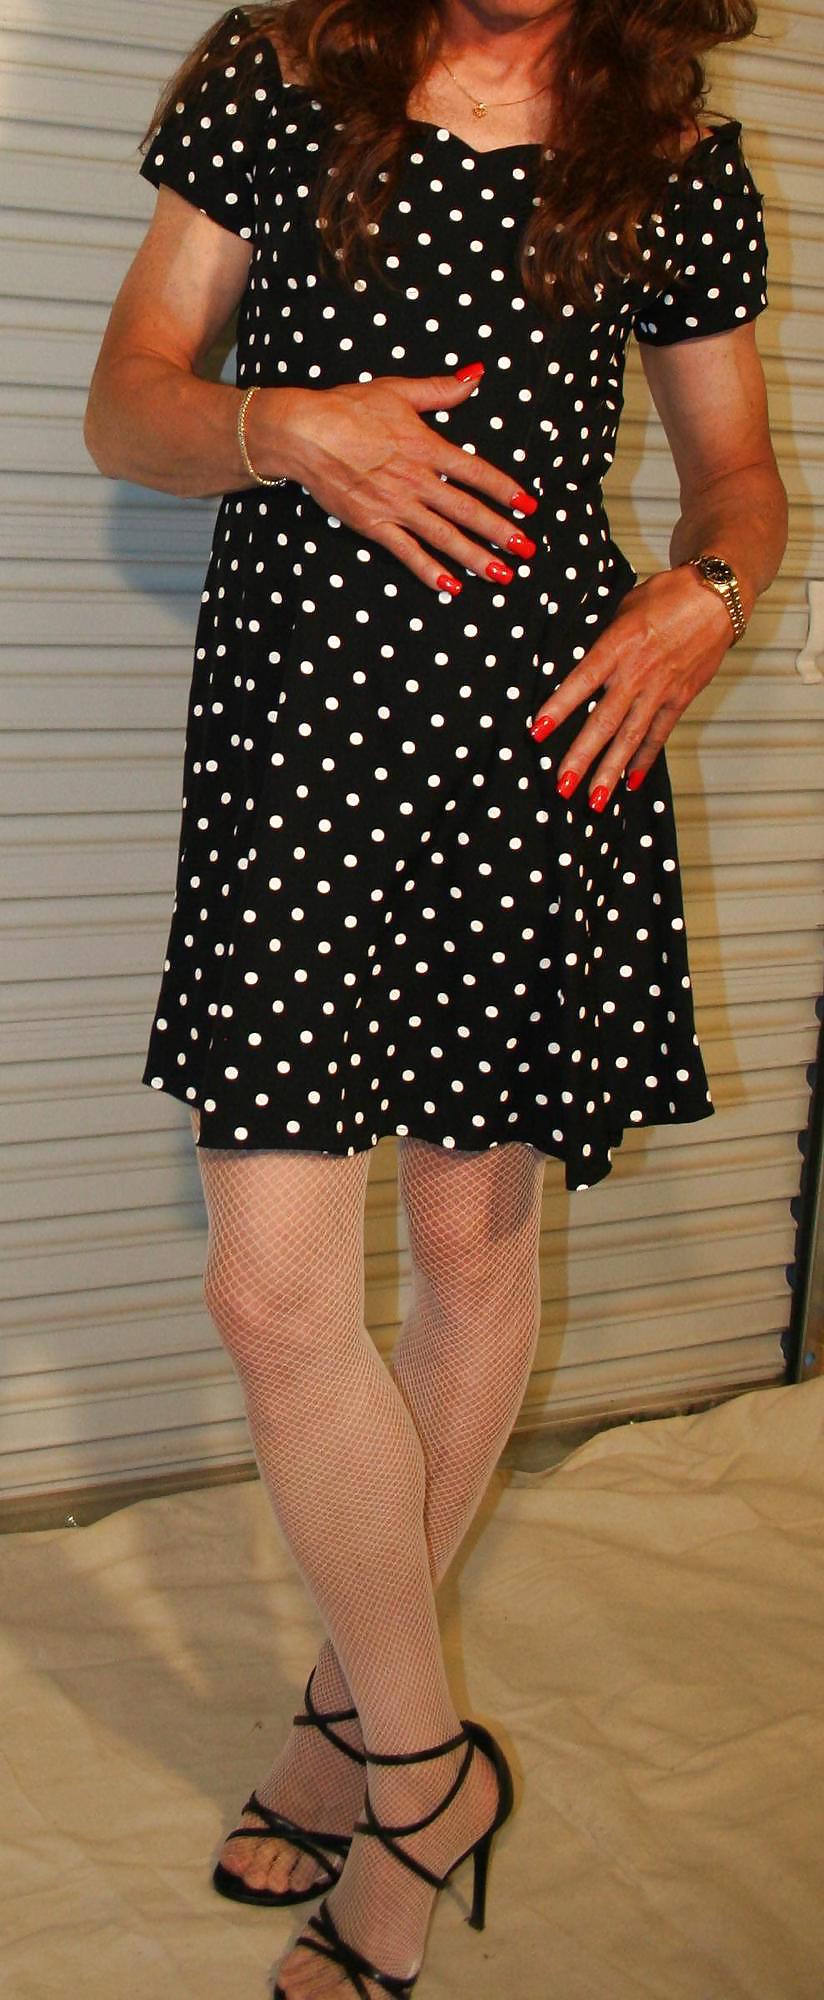 Brianna in a black and white polka dot dress. #21052590